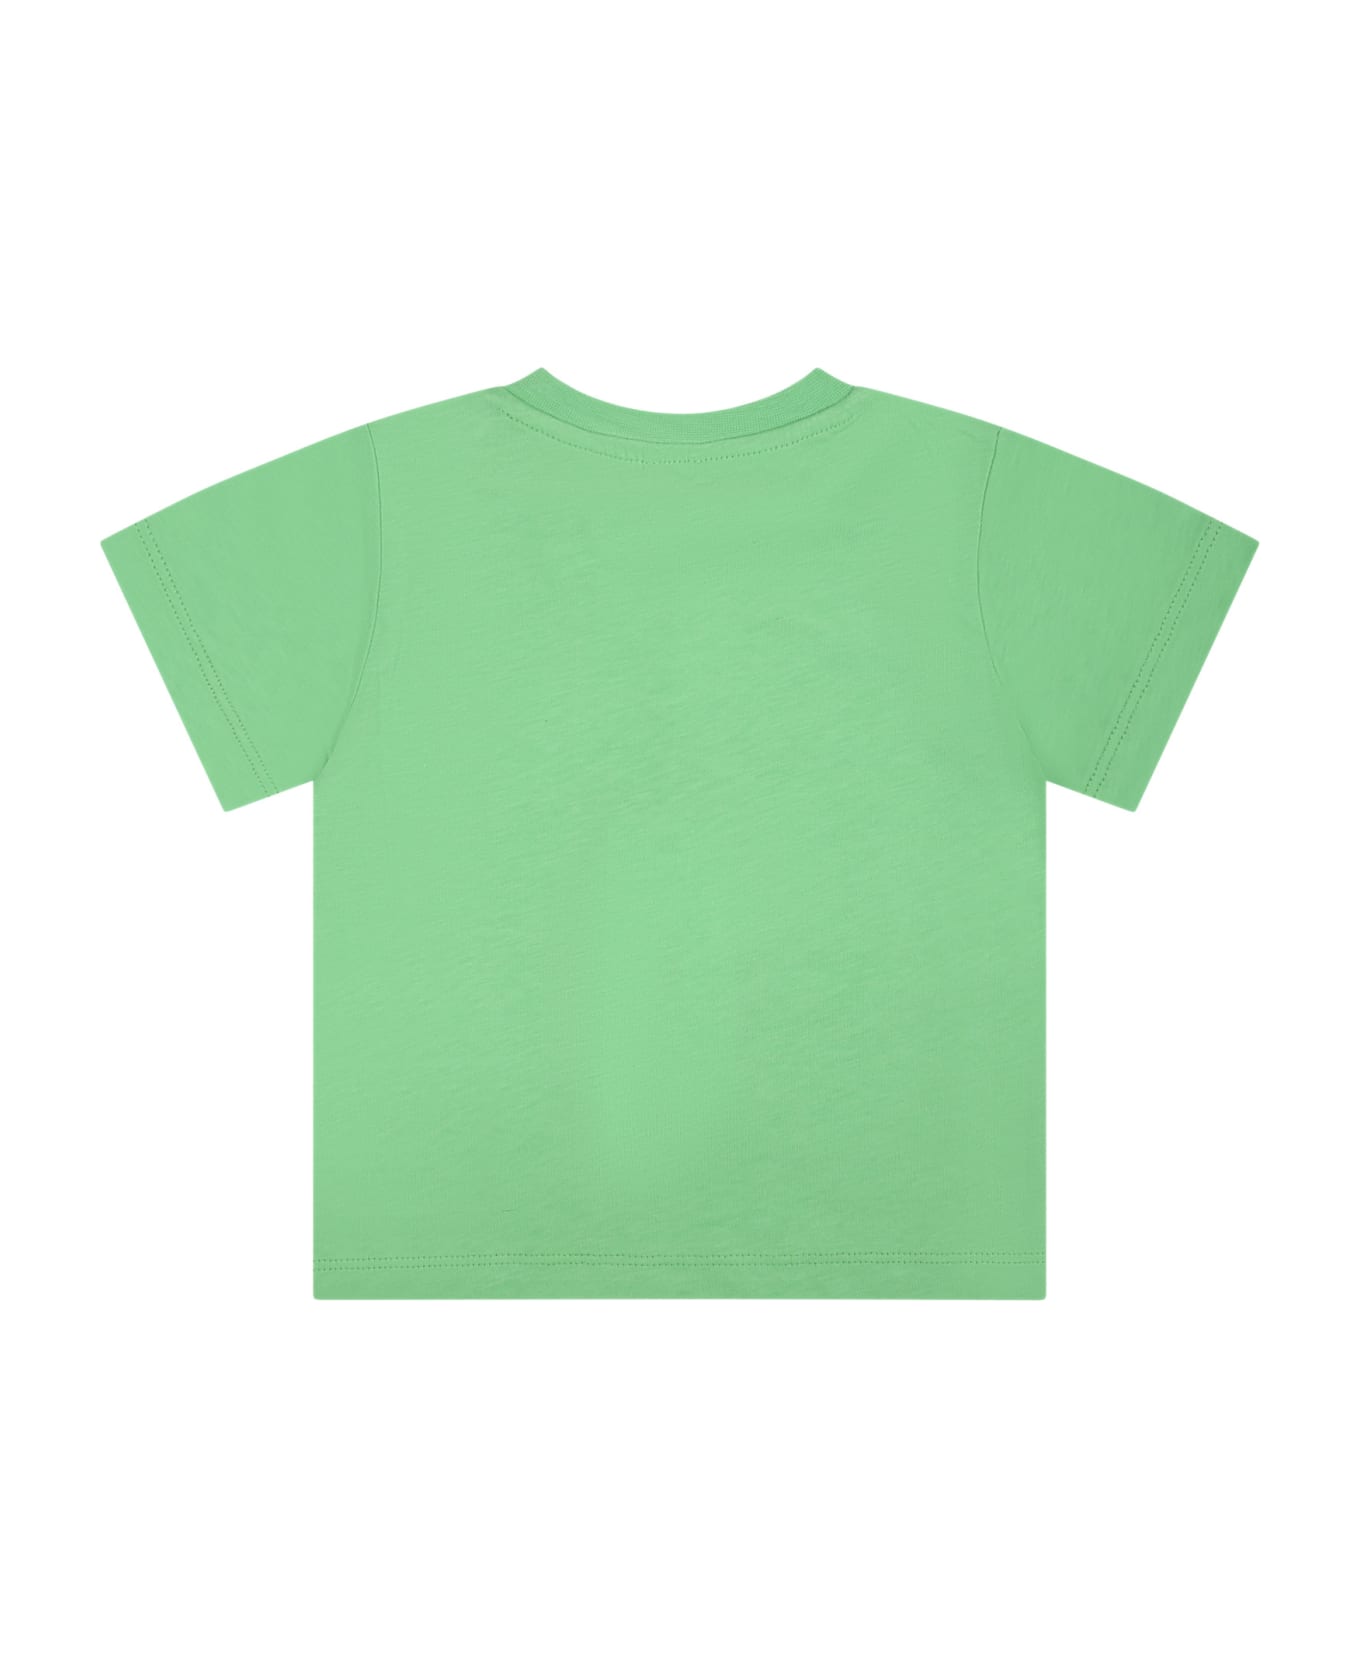 Stella McCartney Kids Green T-shirt For Baby Boy With Sun - Green